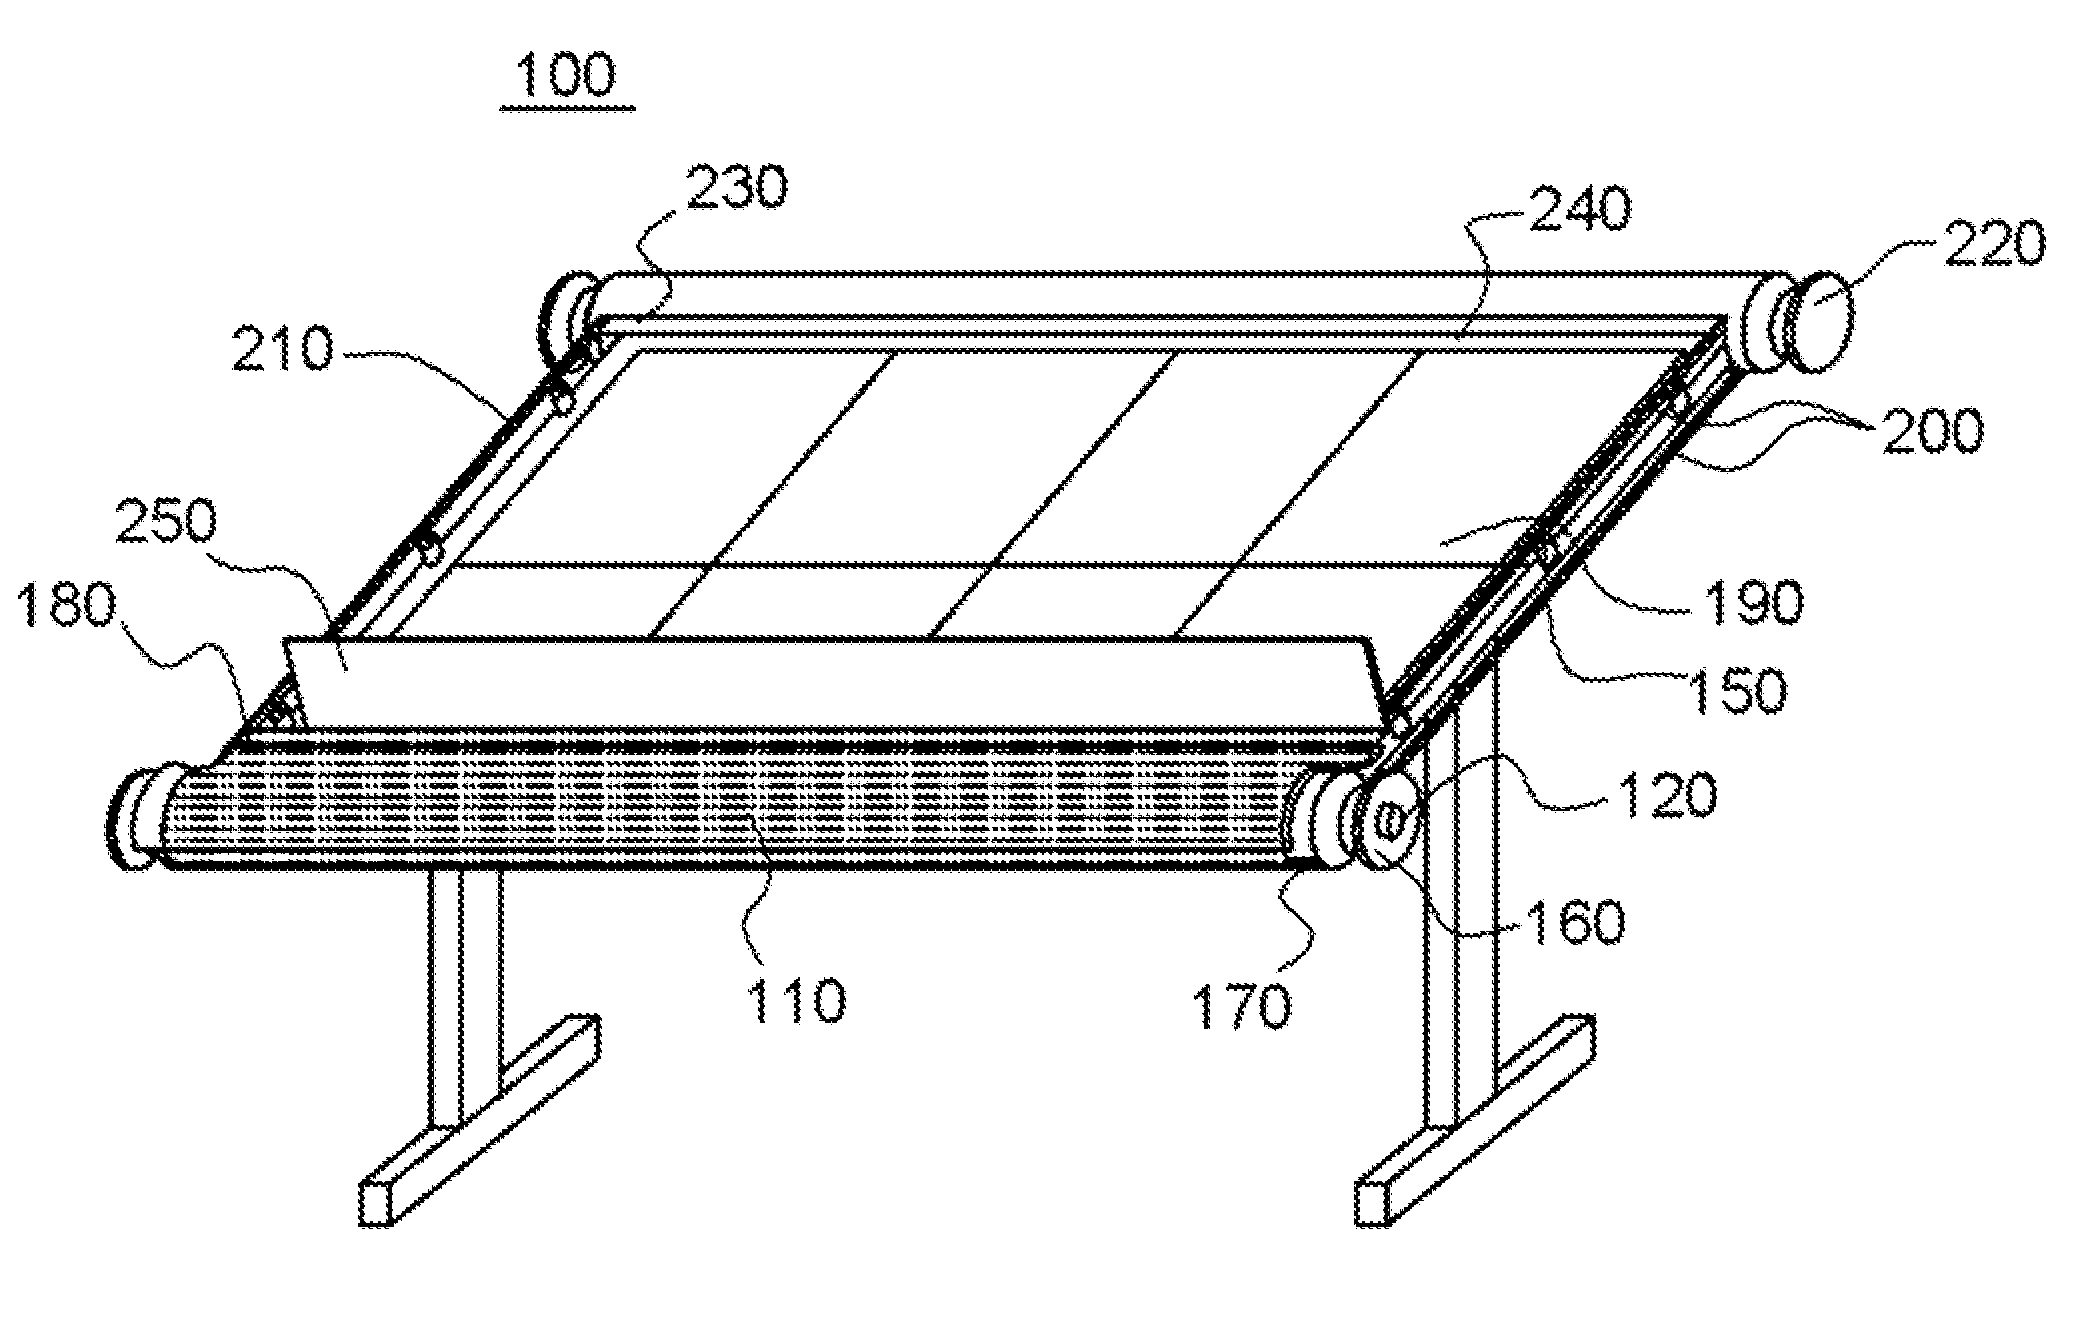 Solar panel curtain device